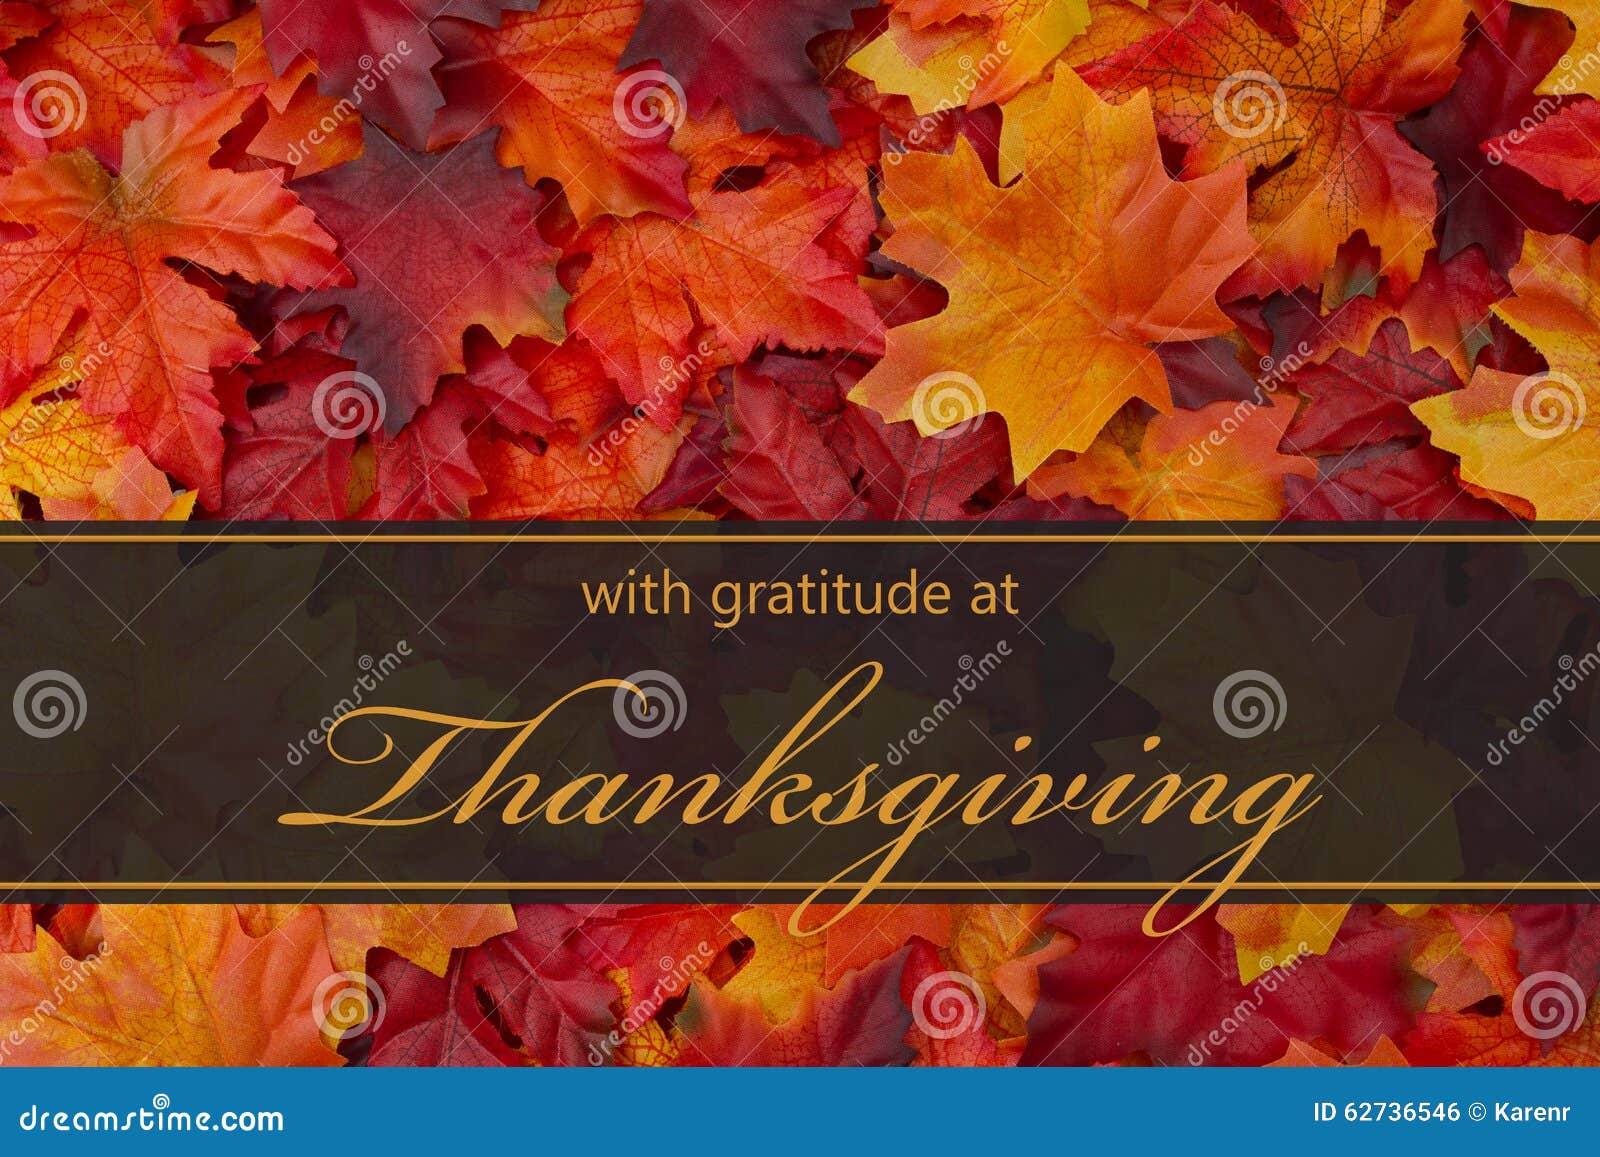 happy thanksgiving greeting